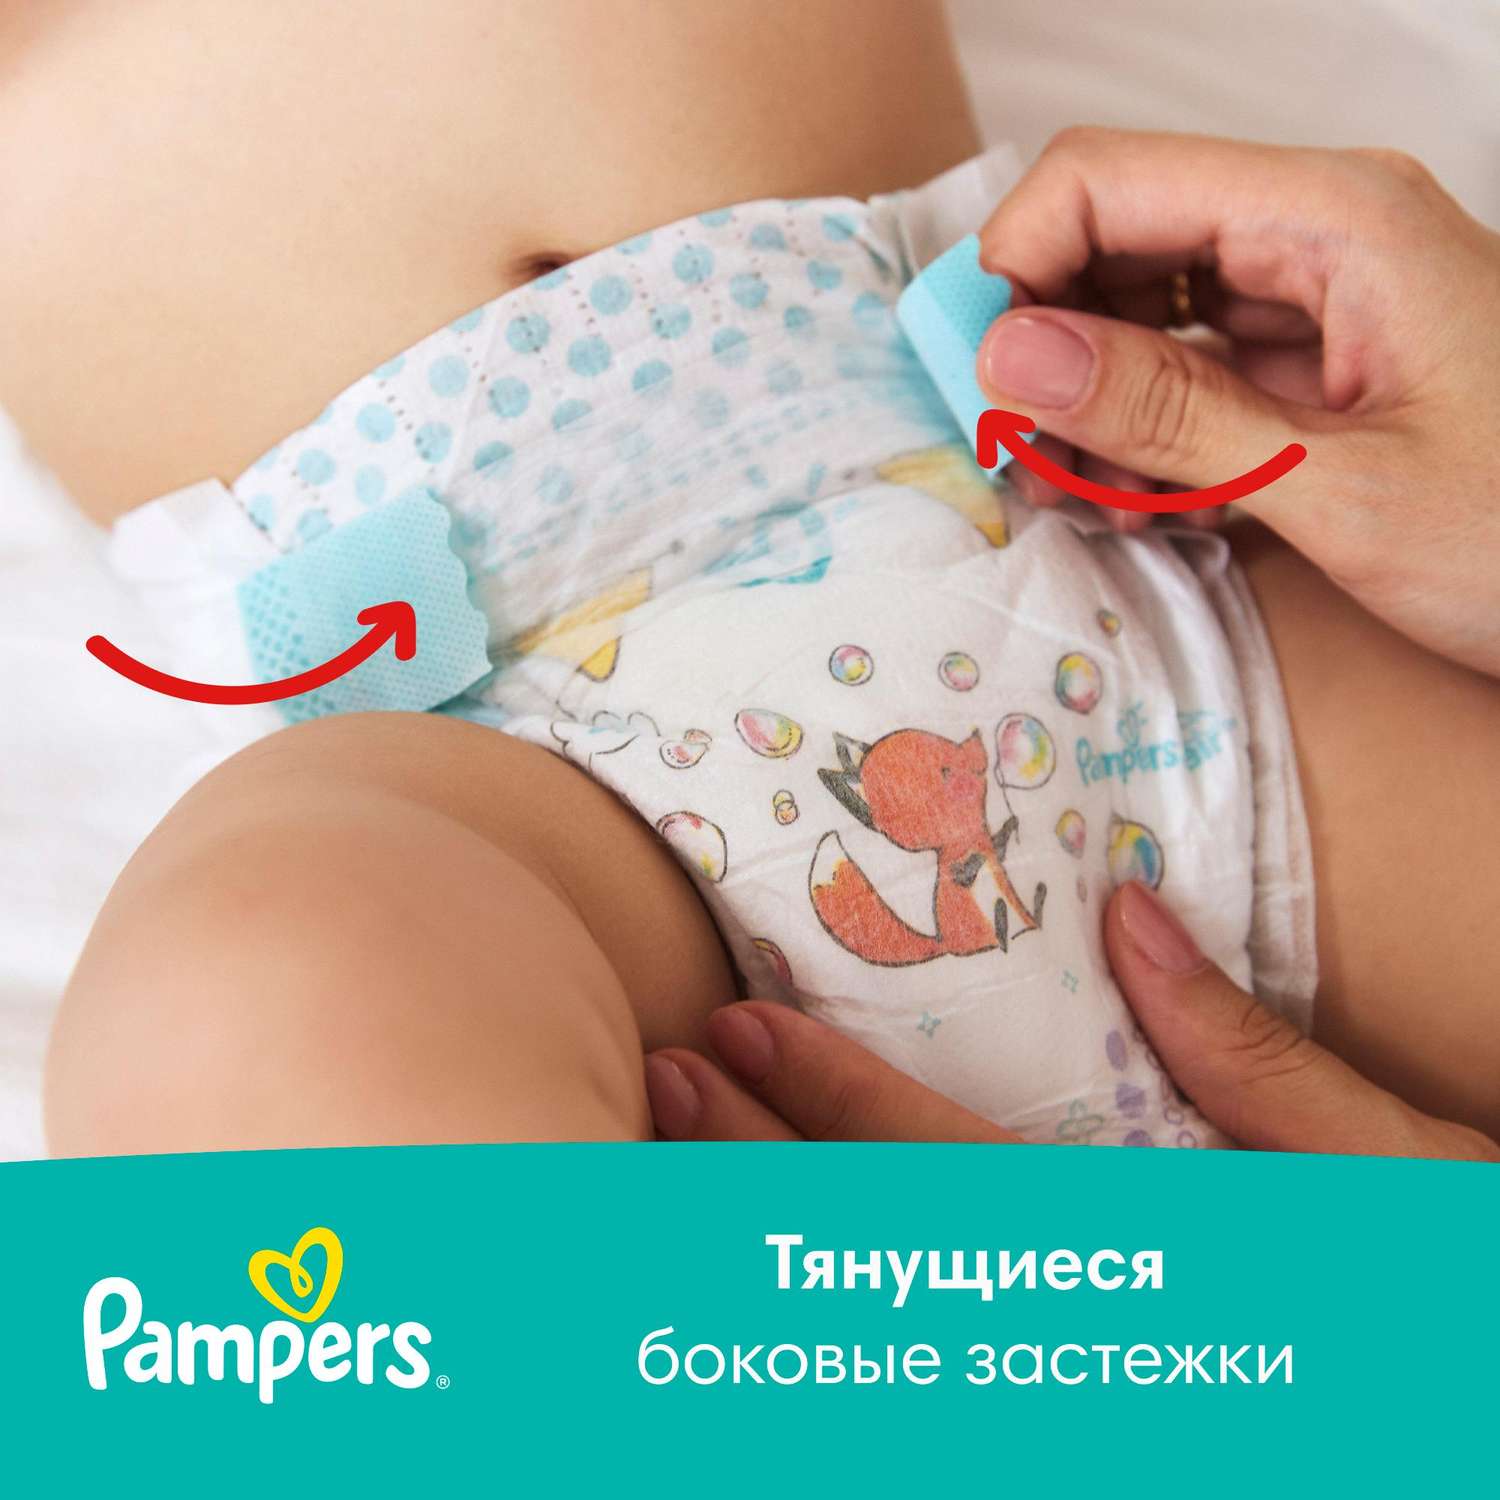 Подгузники Pampers New Baby-Dry 1 2-5кг 27шт - фото 2